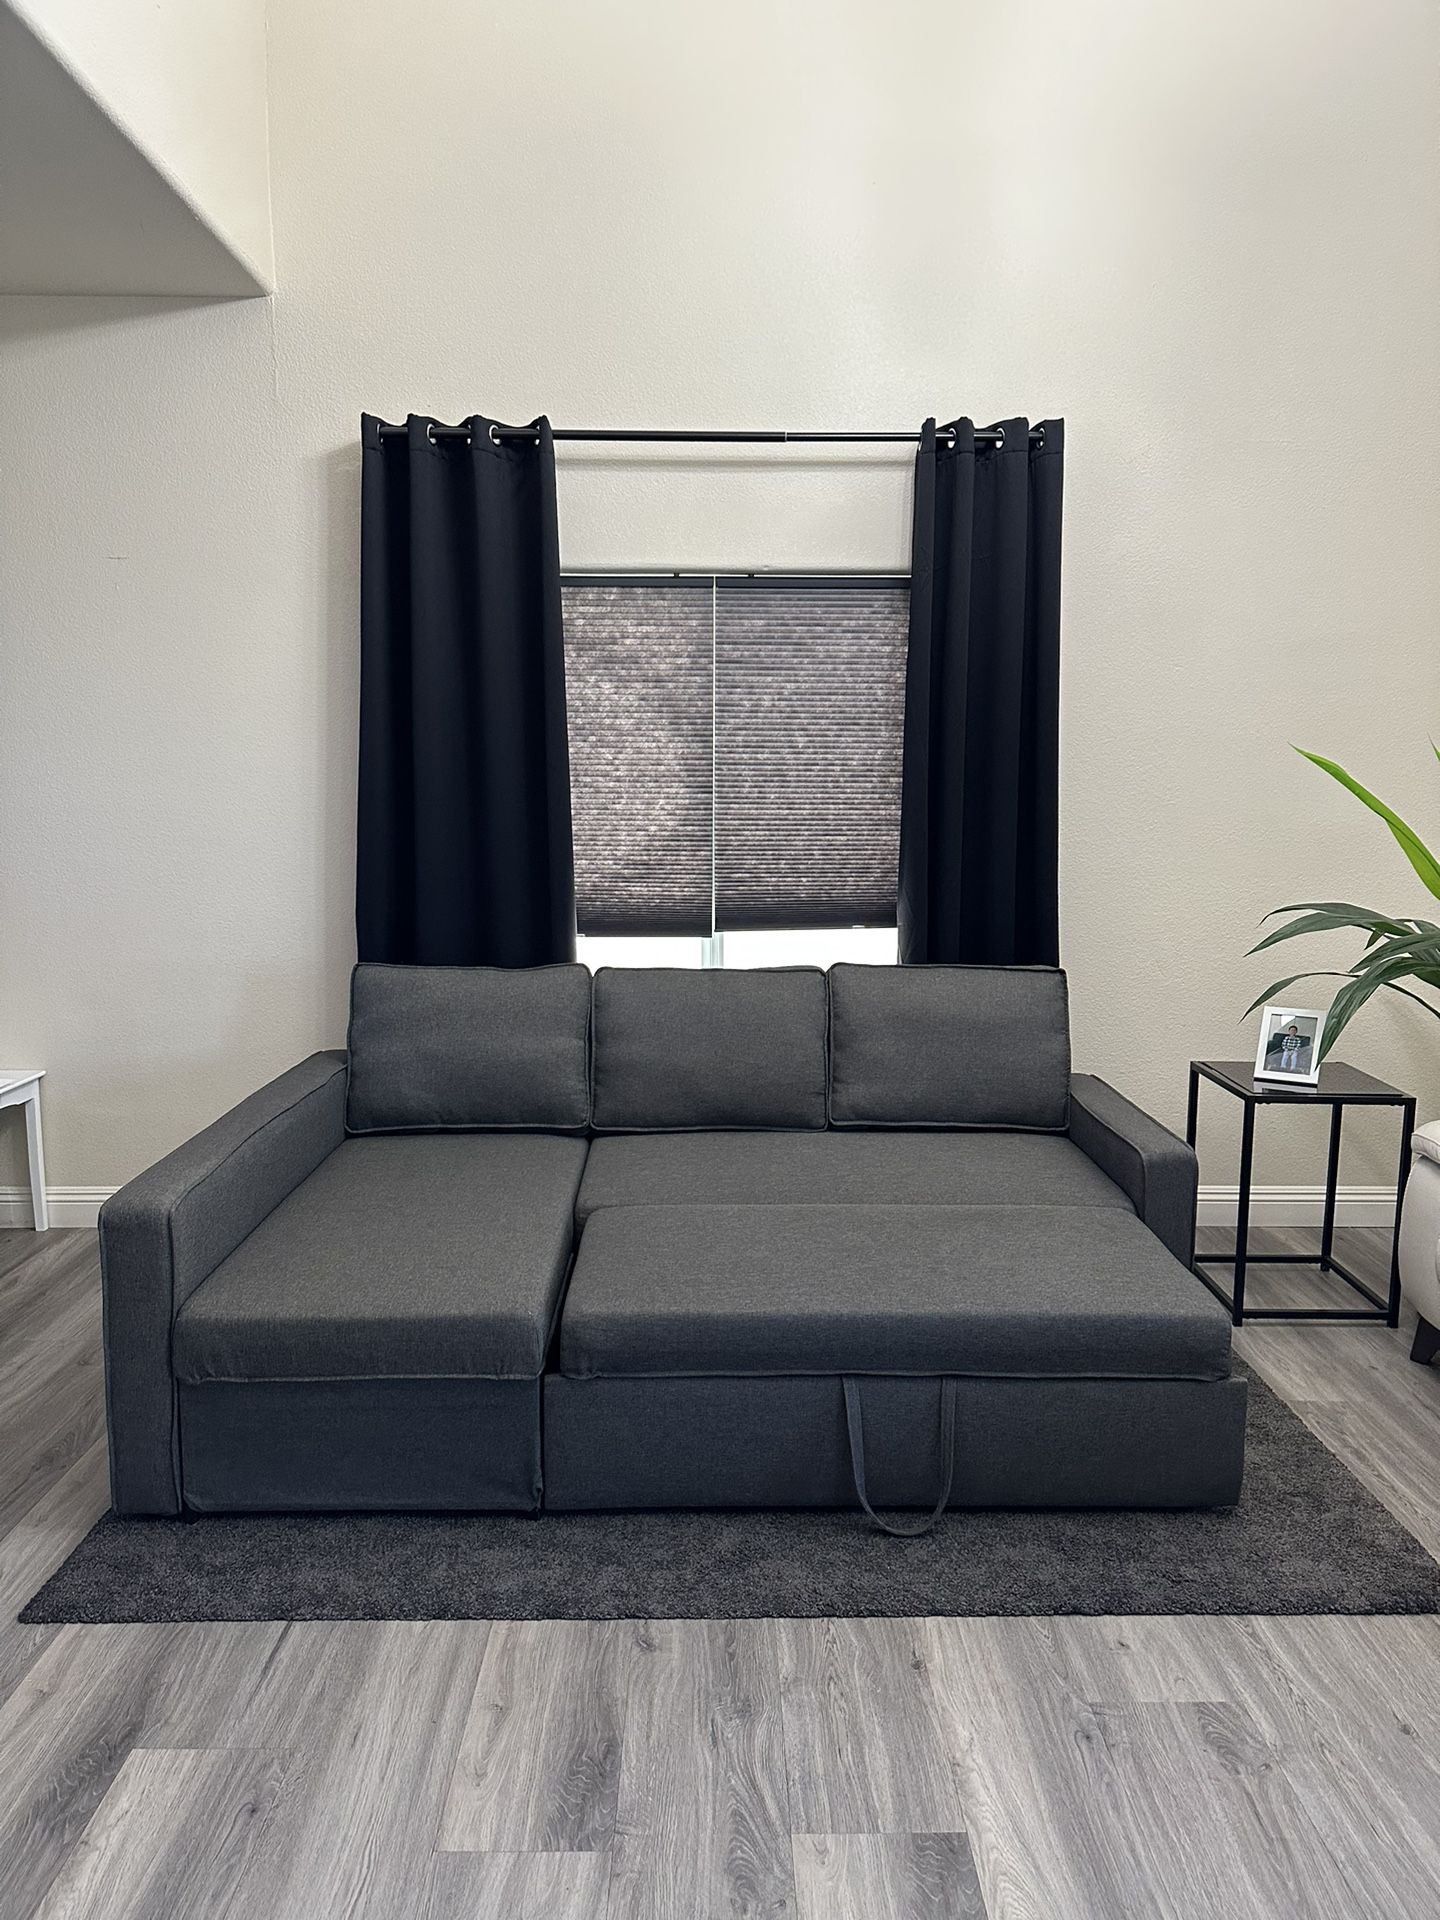 Modern Dark Grey Pop Up Sleeper Sectional Sofa Couch